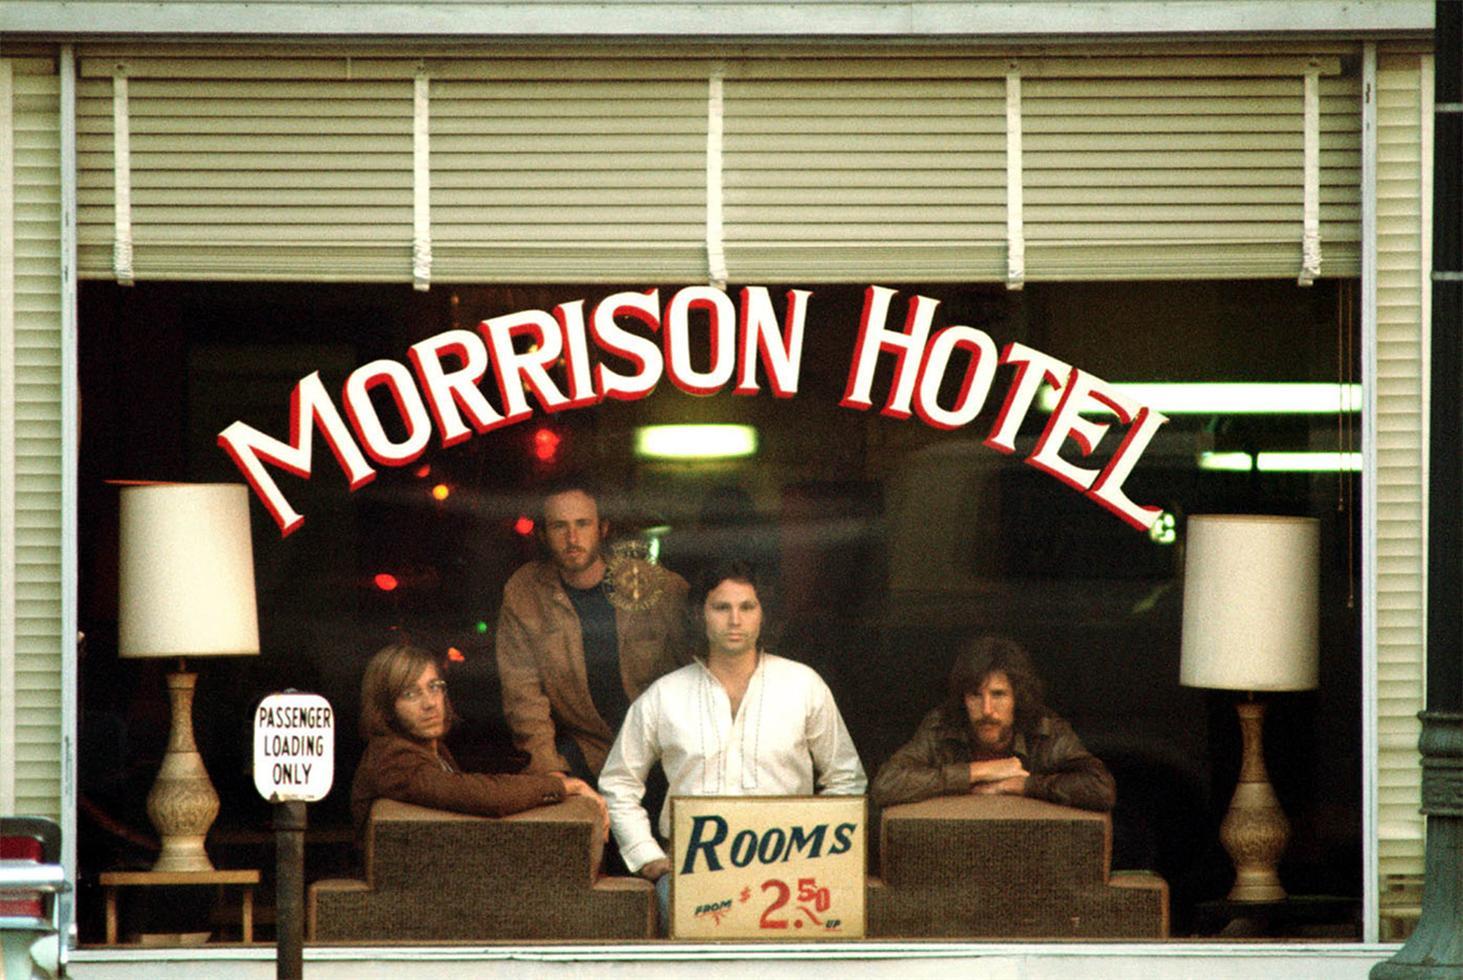 Henry Diltz Portrait Photograph - The Doors, "Morrison Hotel" 50th Anniversary, Los Angeles, CA, 1969